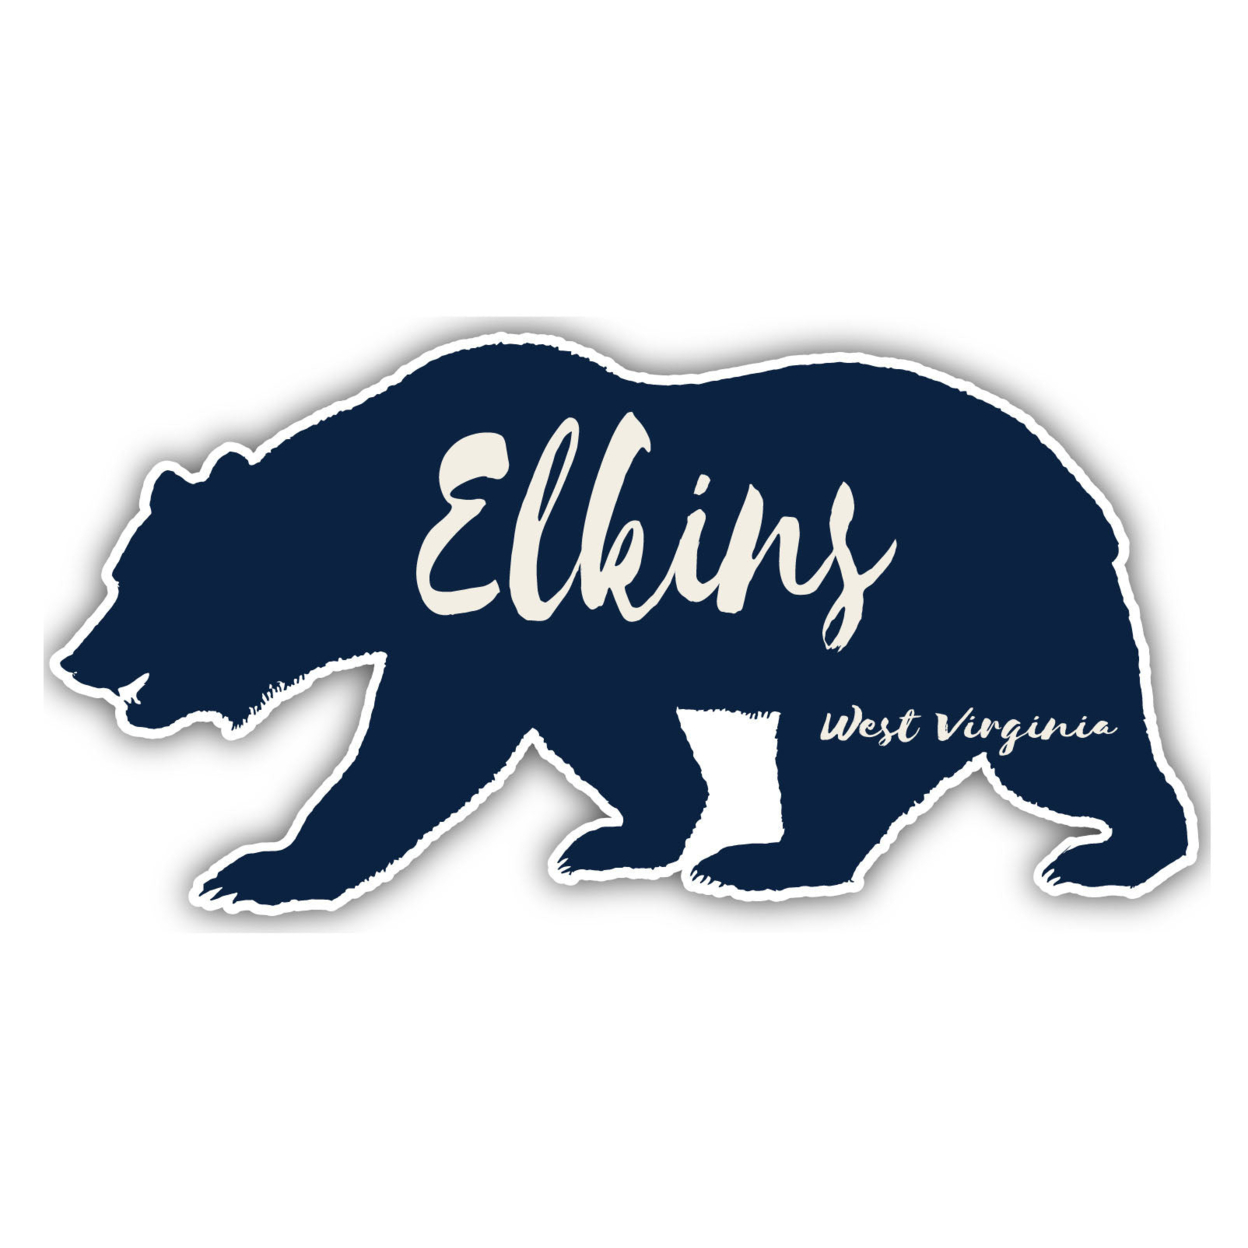 Elkins West Virginia Souvenir Decorative Stickers (Choose Theme And Size) - Single Unit, 12-Inch, Camp Life